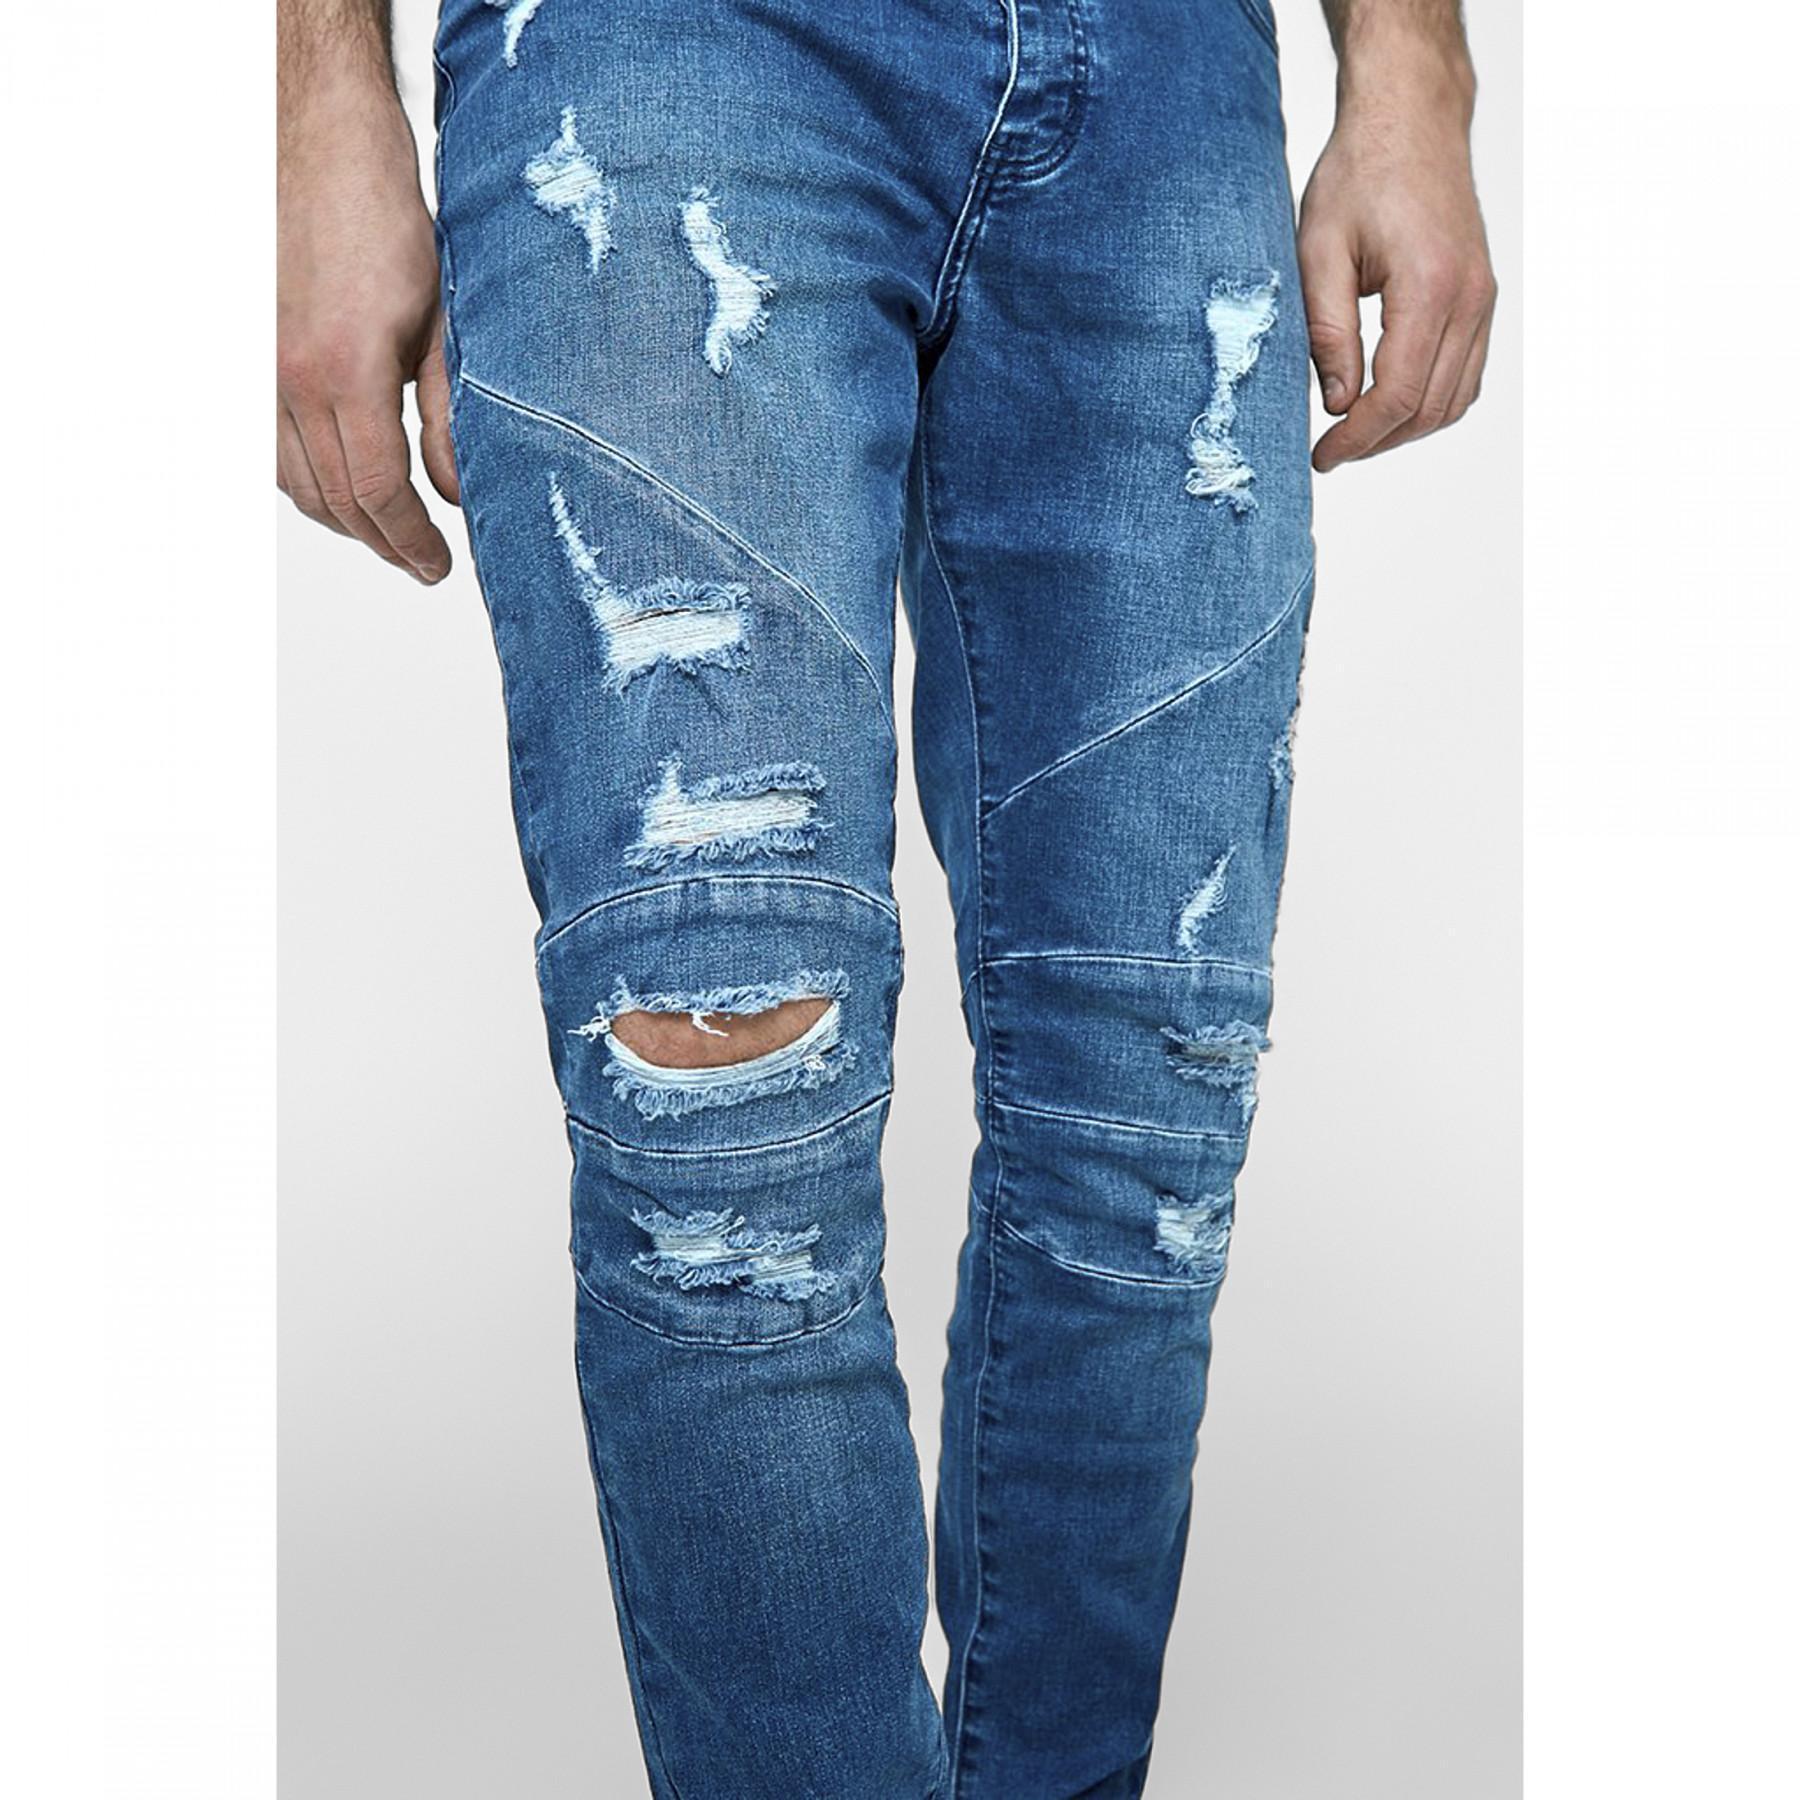 Pantalon jeans Cayler & Sons alldd paneled ian denim